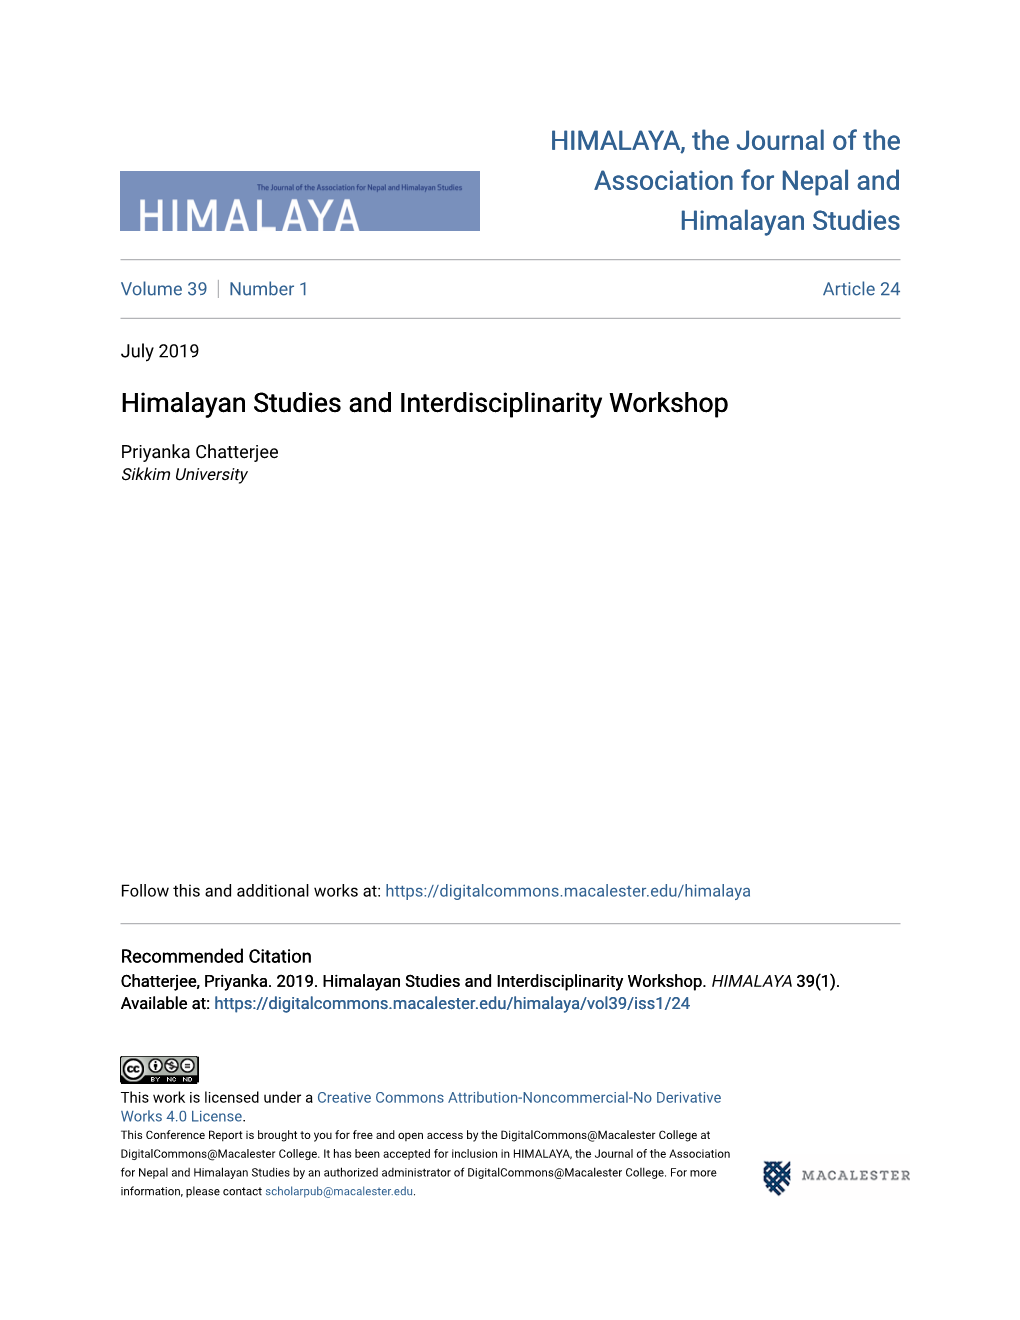 Himalayan Studies and Interdisciplinarity Workshop